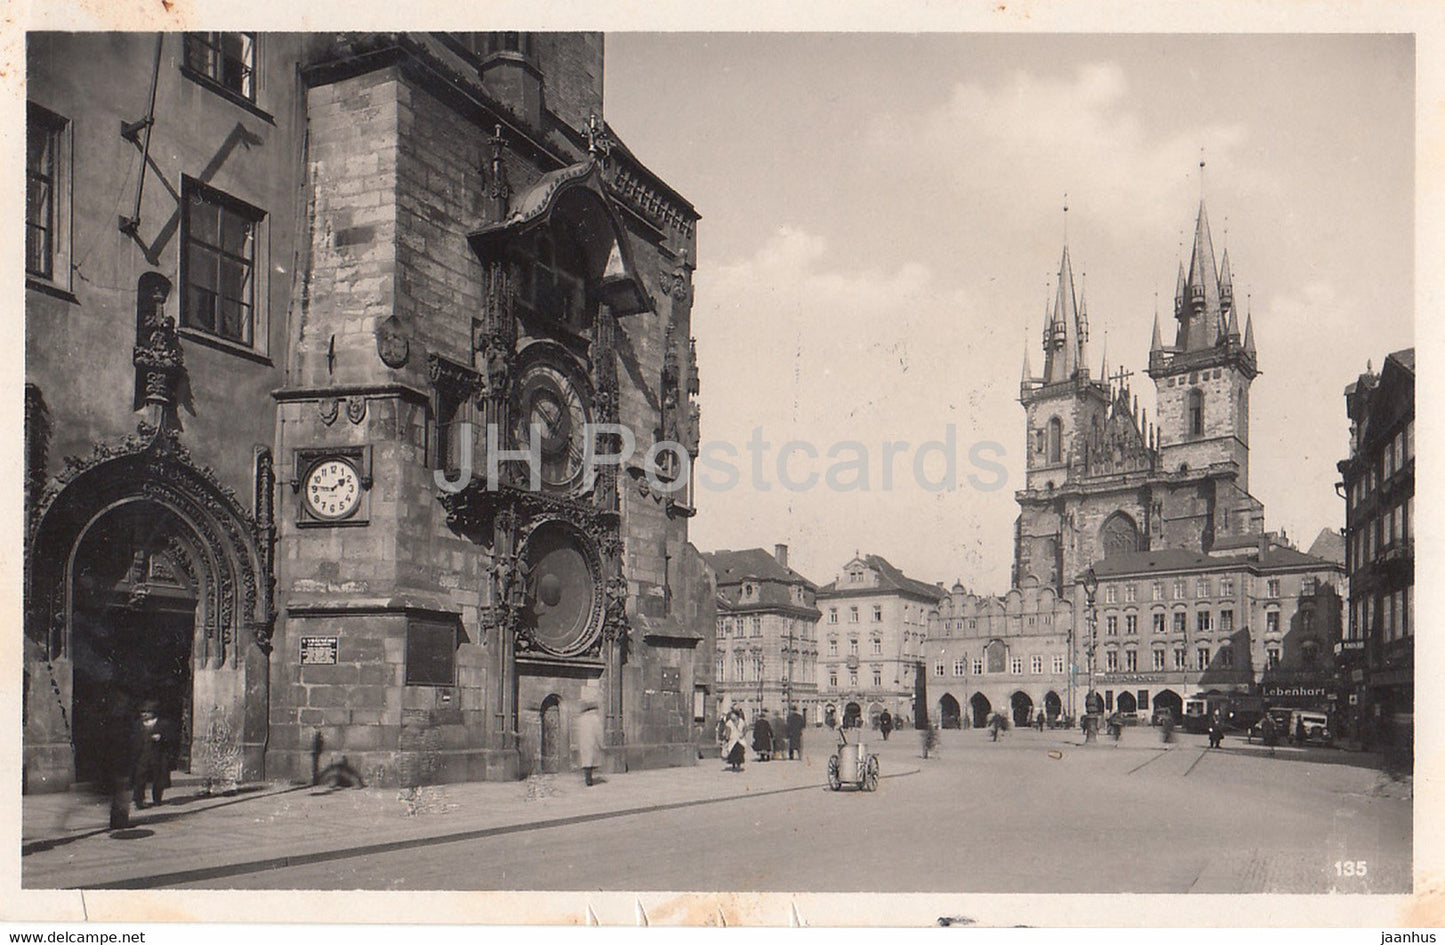 Praha - Prague - Staromestske namesti - Altstadter Ring - 135 - old postcard -  1943 - Czech Republic - used - JH Postcards